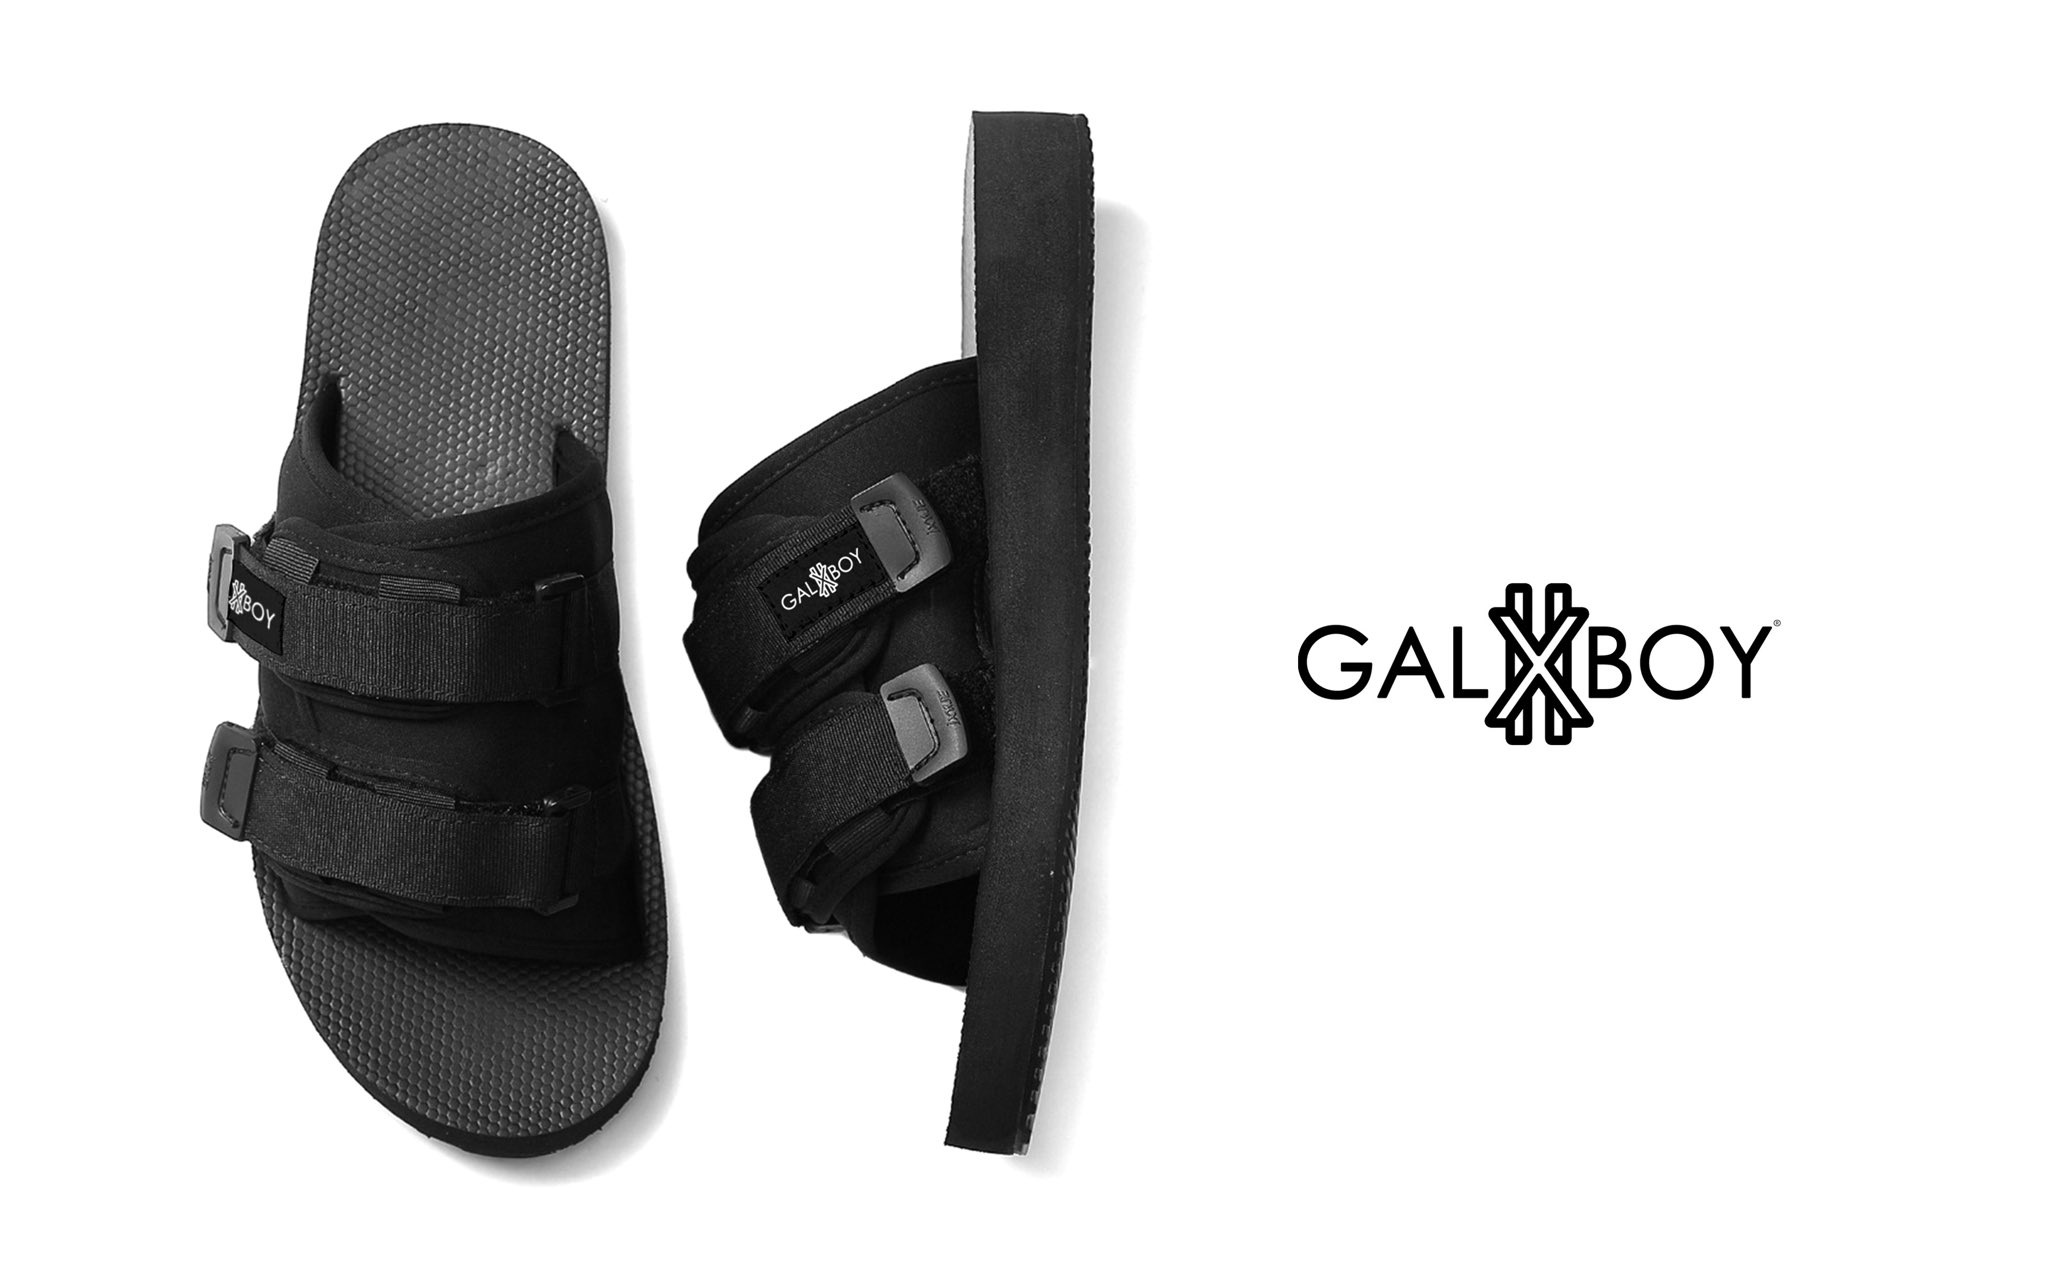 GALXBOY® on X: The GALXBOY mule sandal in 8BIT Monogram canvas